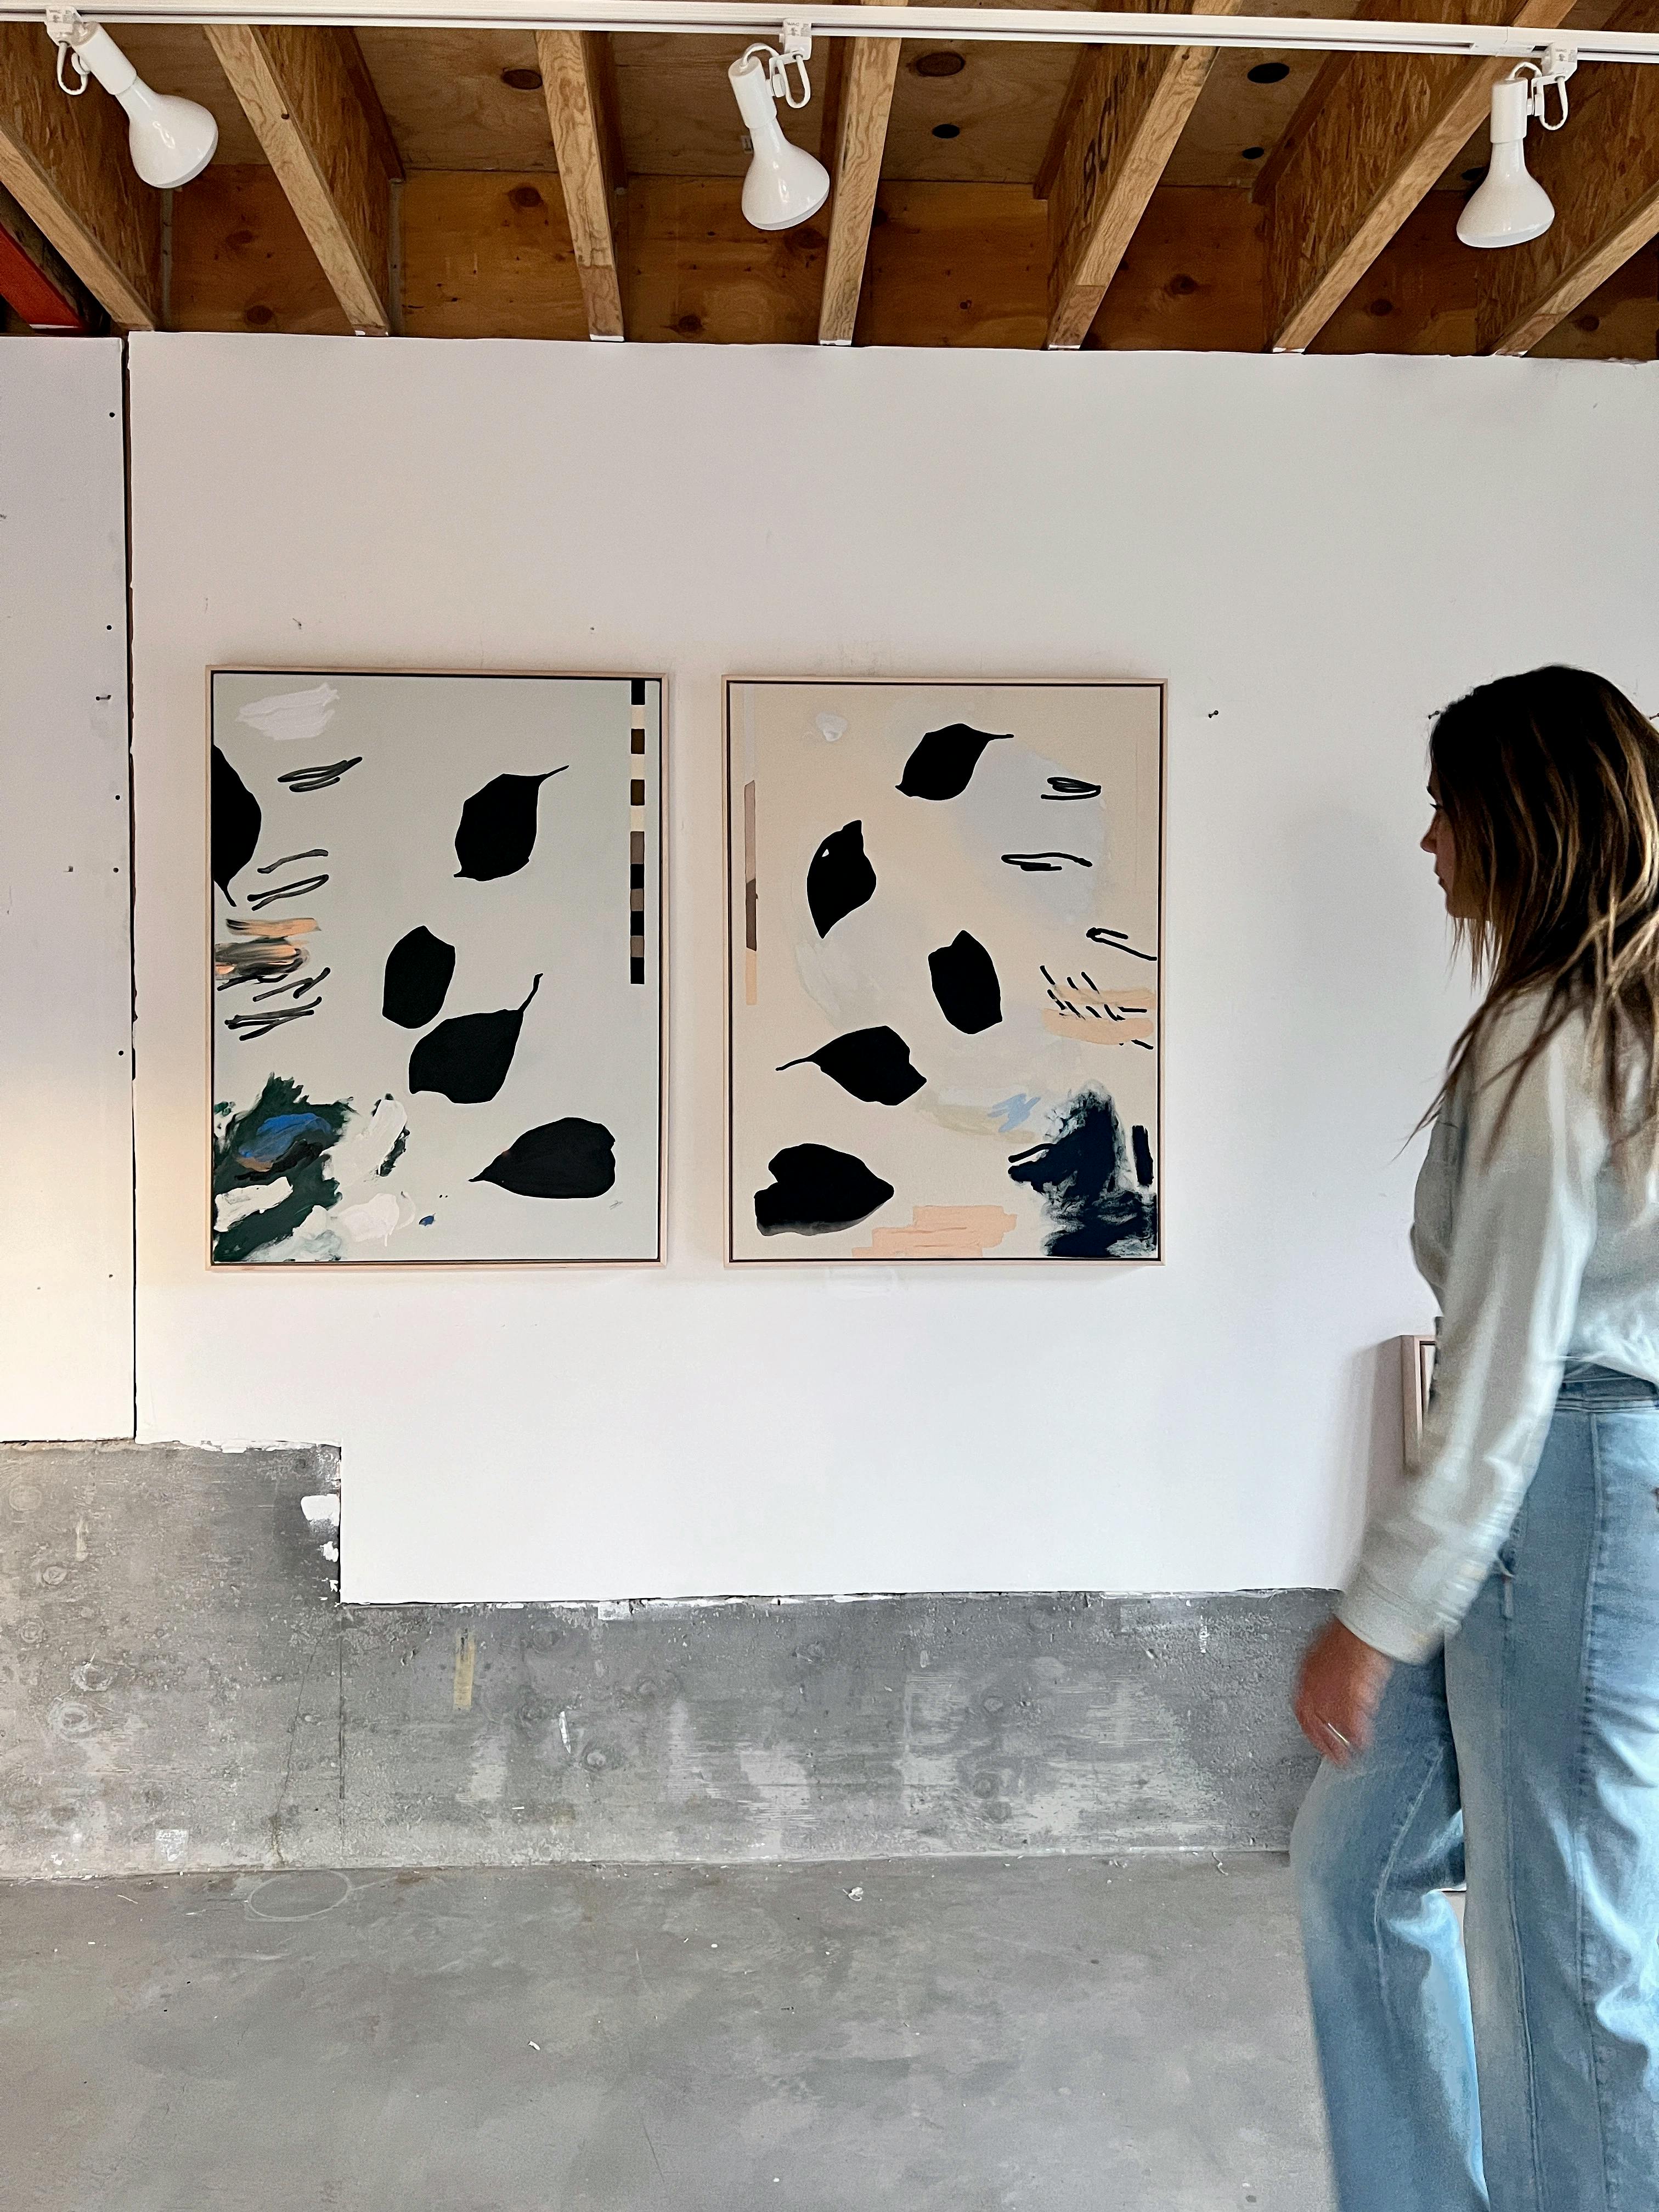 Journal: Visit with Karina Bania: Gallery